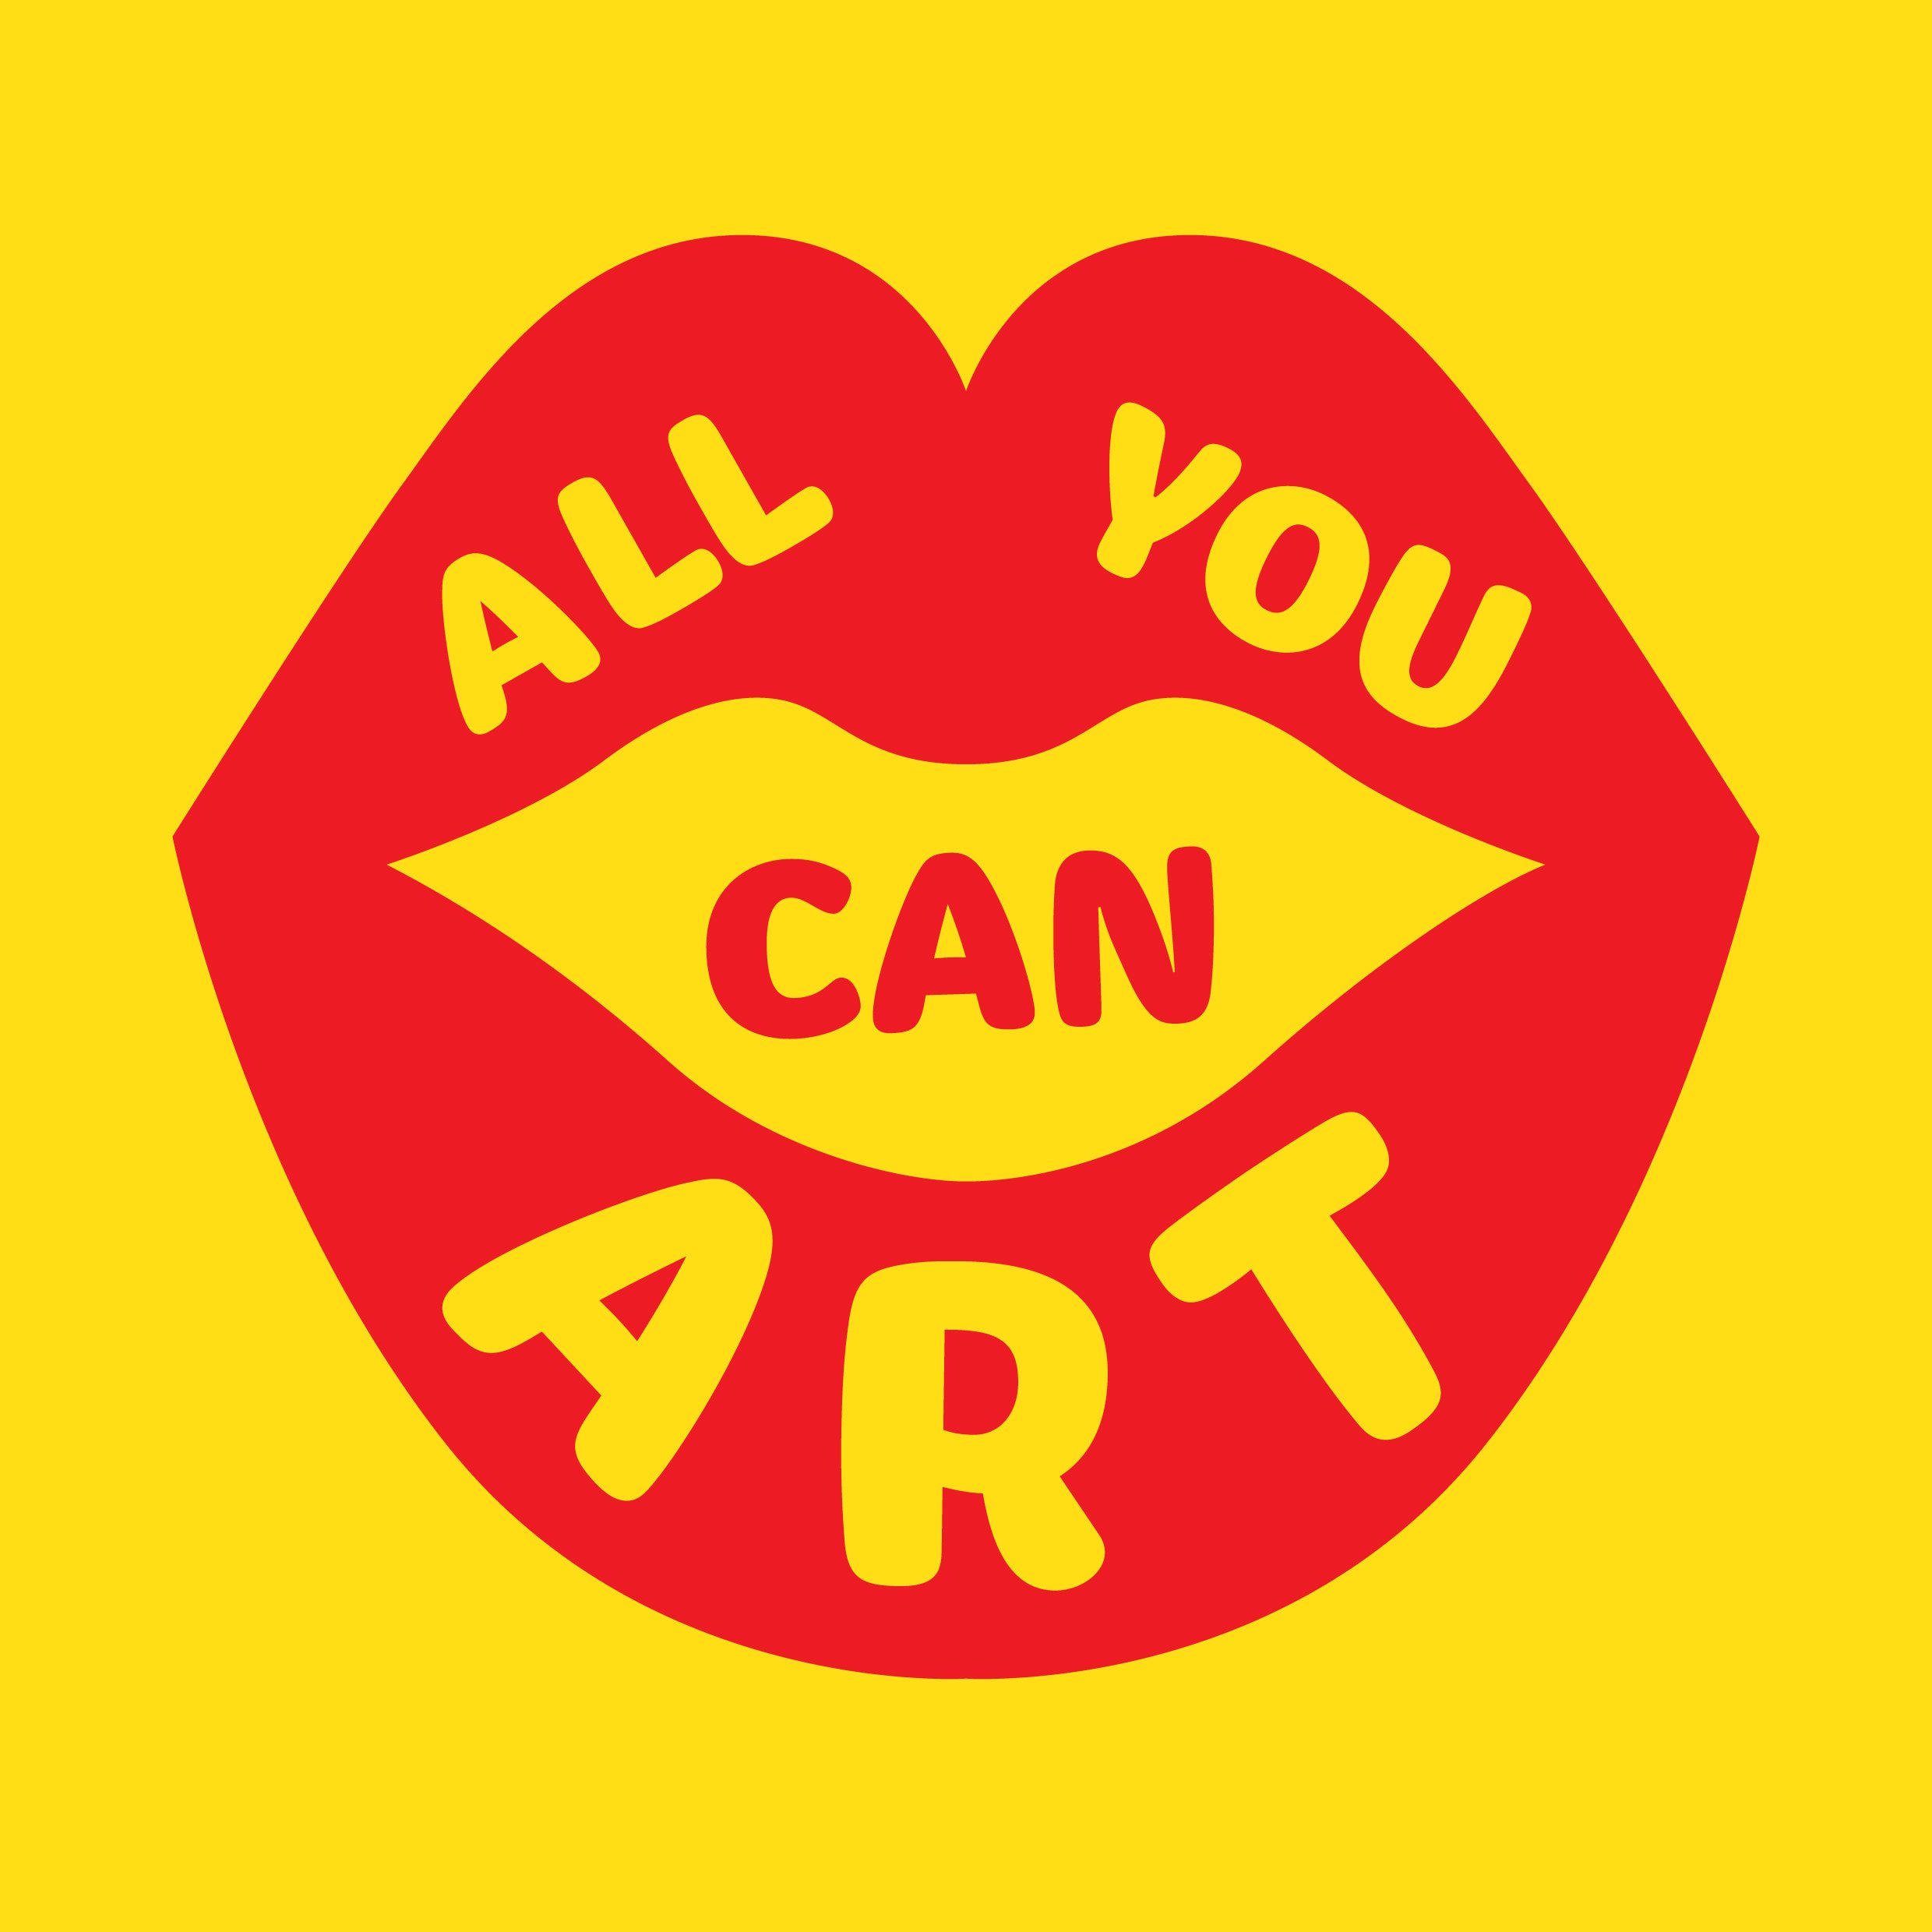 11 - All you can Art, Kunsthal Rotterdam.jpg